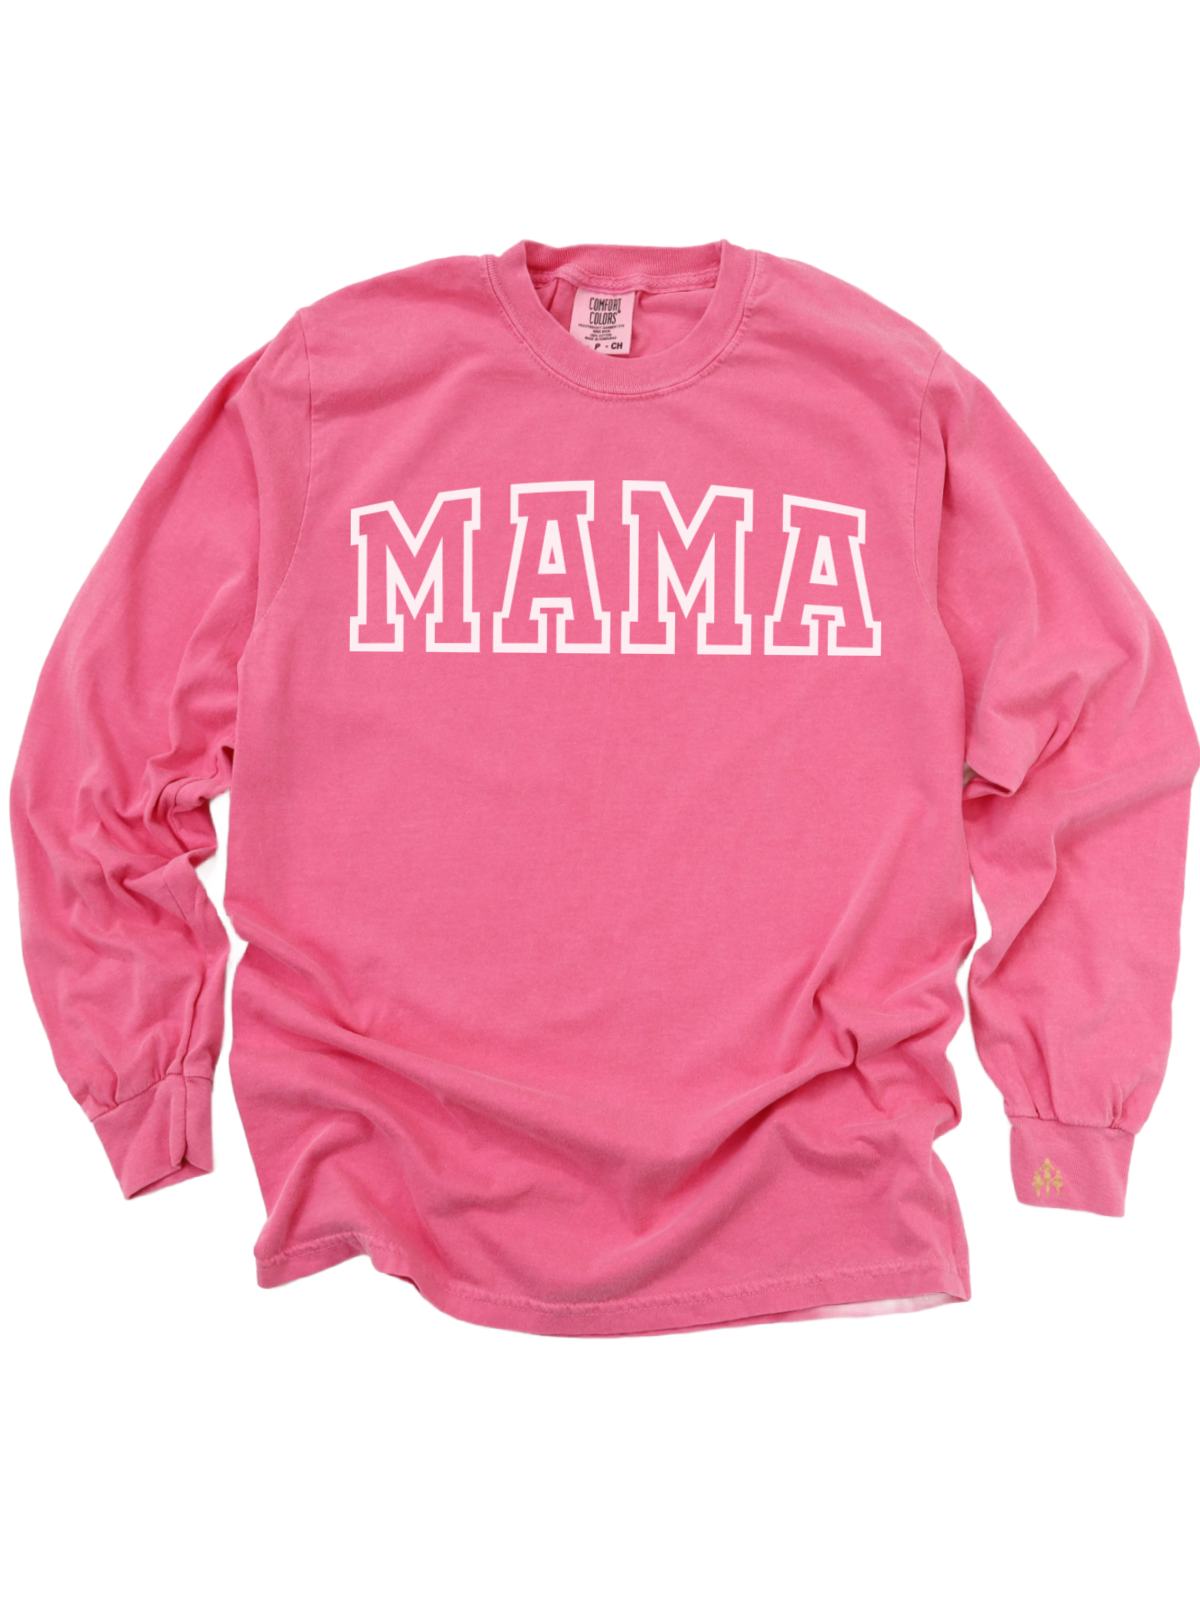 MAMA Varsity Crunch Berry Pink Long Sleeve Shirt